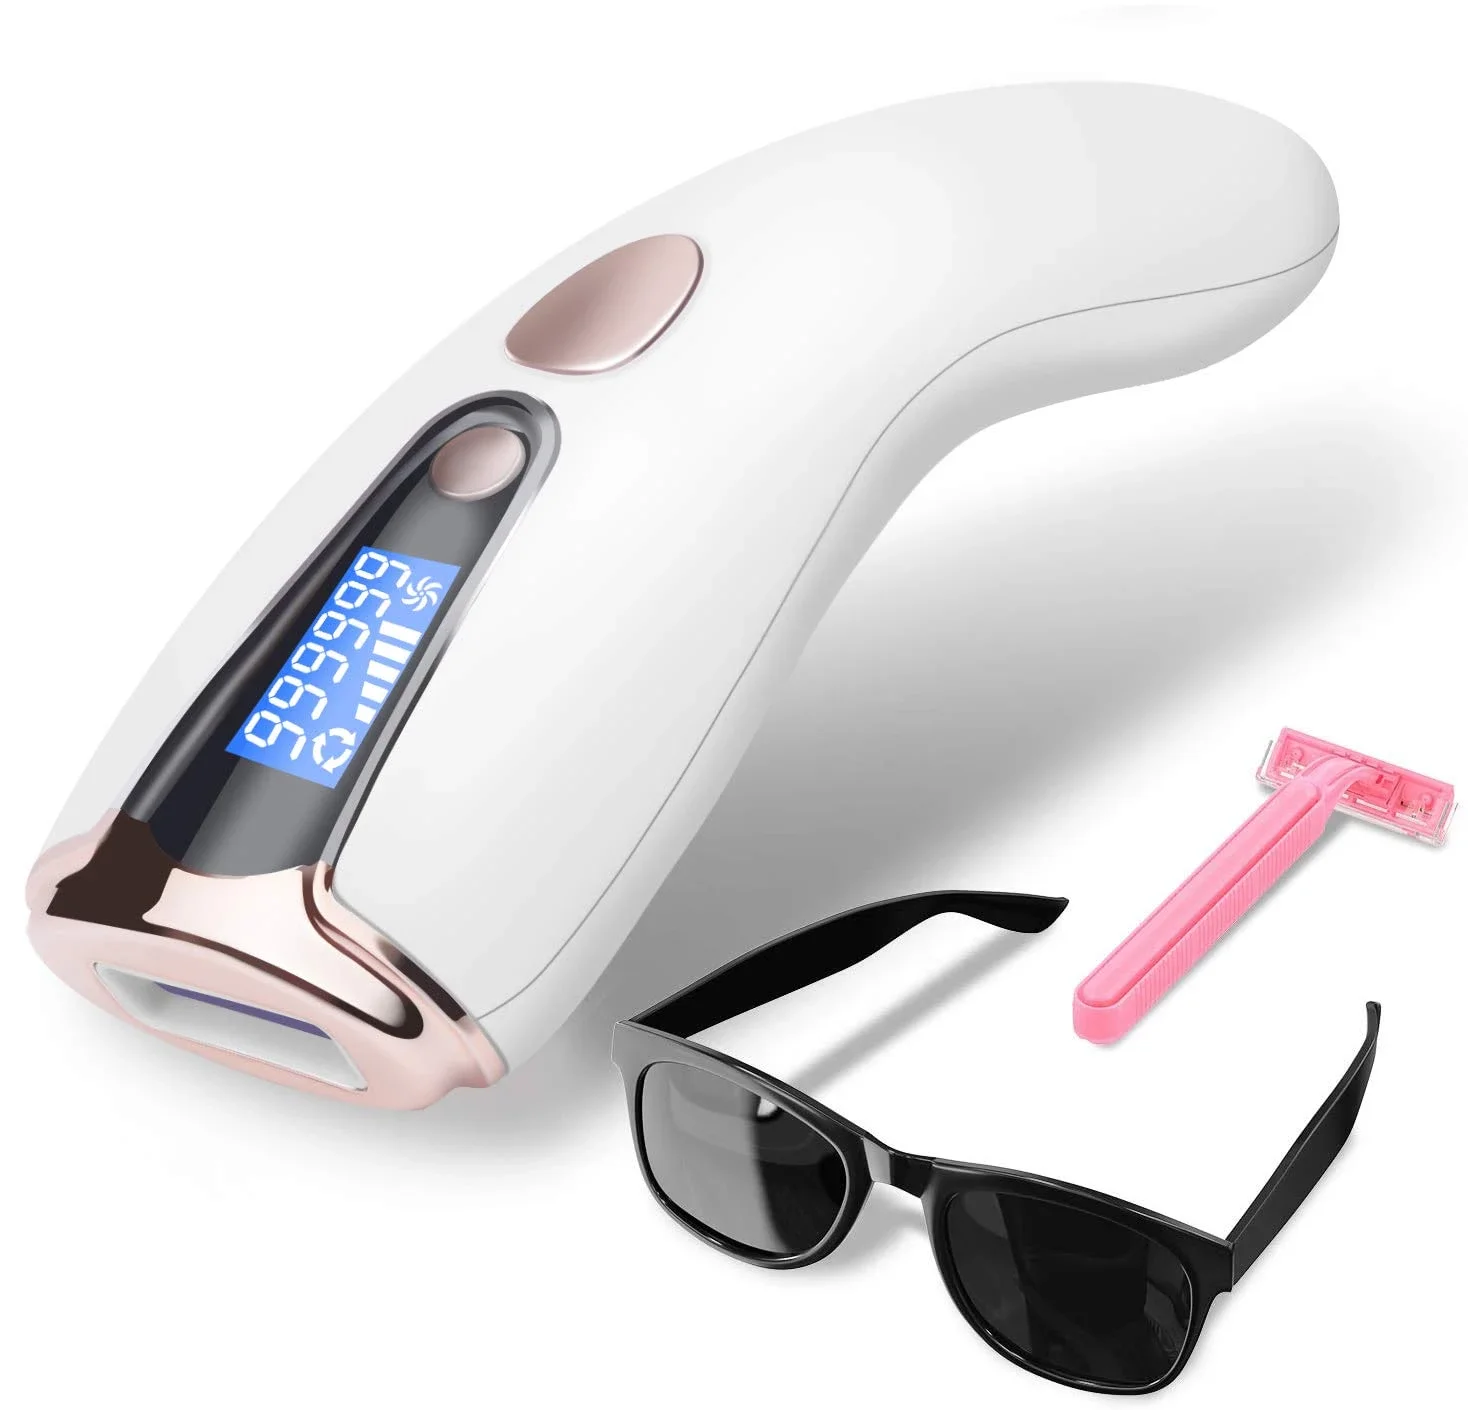 

2021 Amazon hot sell Home Use Permanent Handset Laser Epilator IPL Hair Removal Machine, White